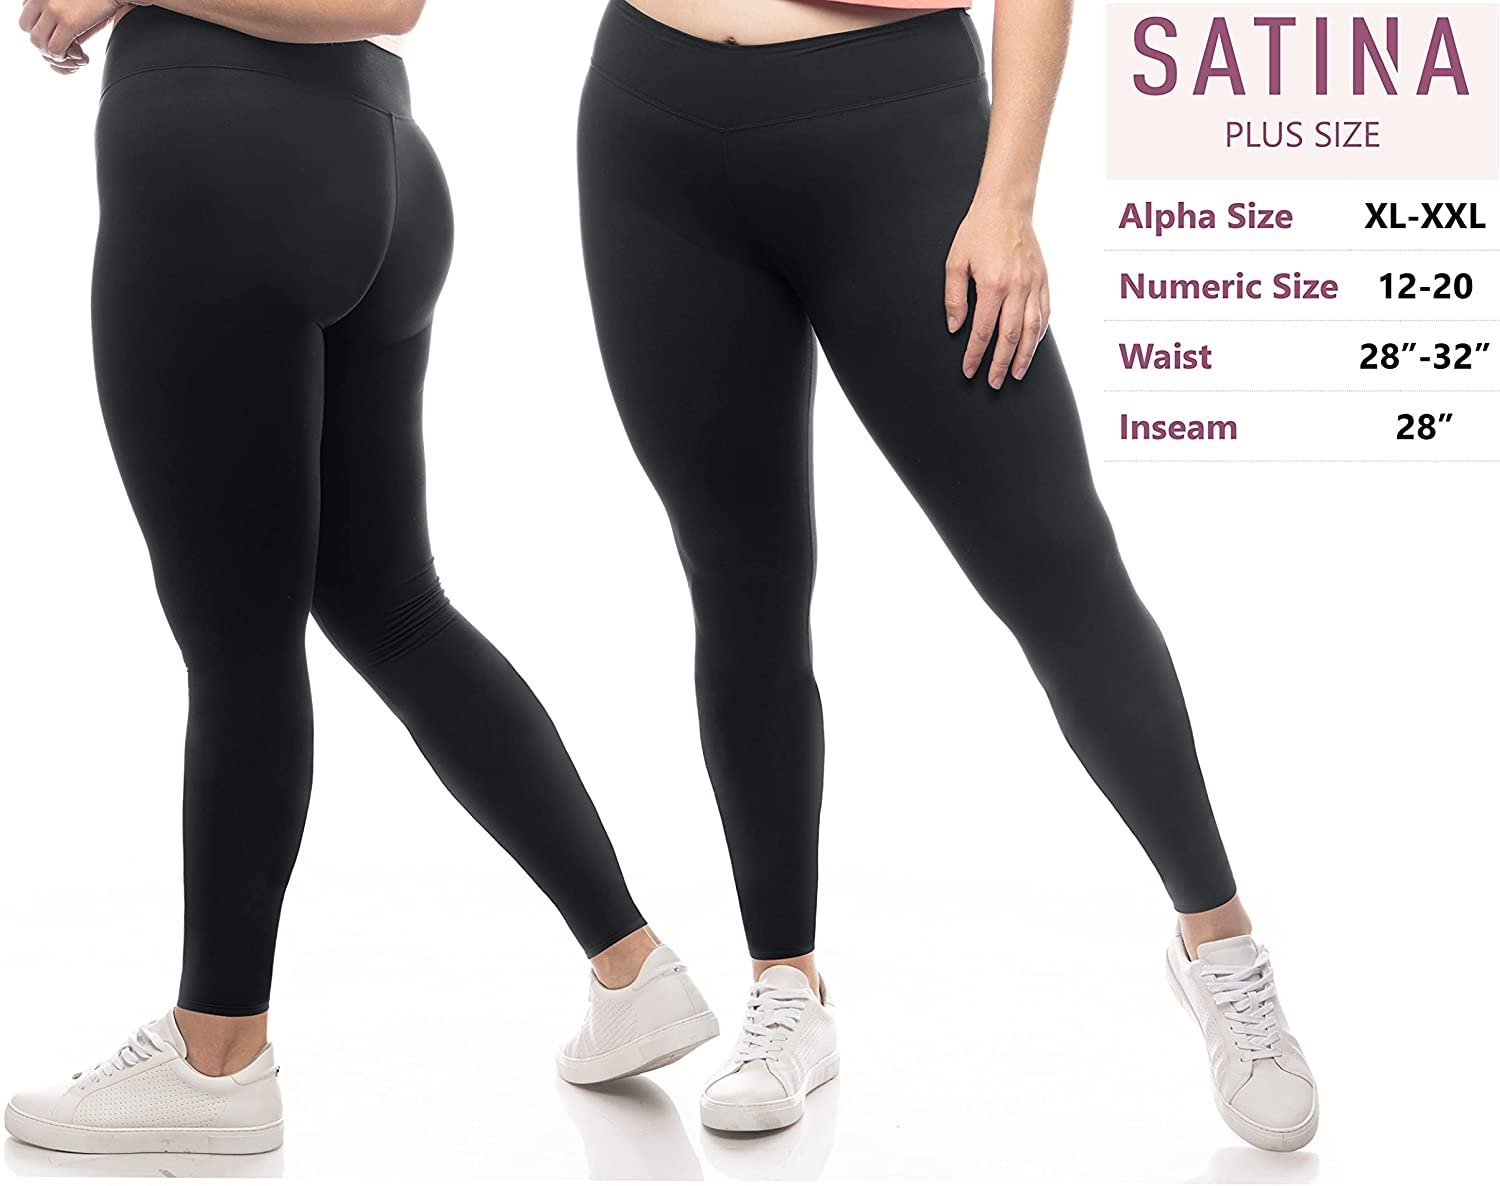 SATINA Black High Waisted Leggings 3 Waistband One Size - Free Shipping & Returns